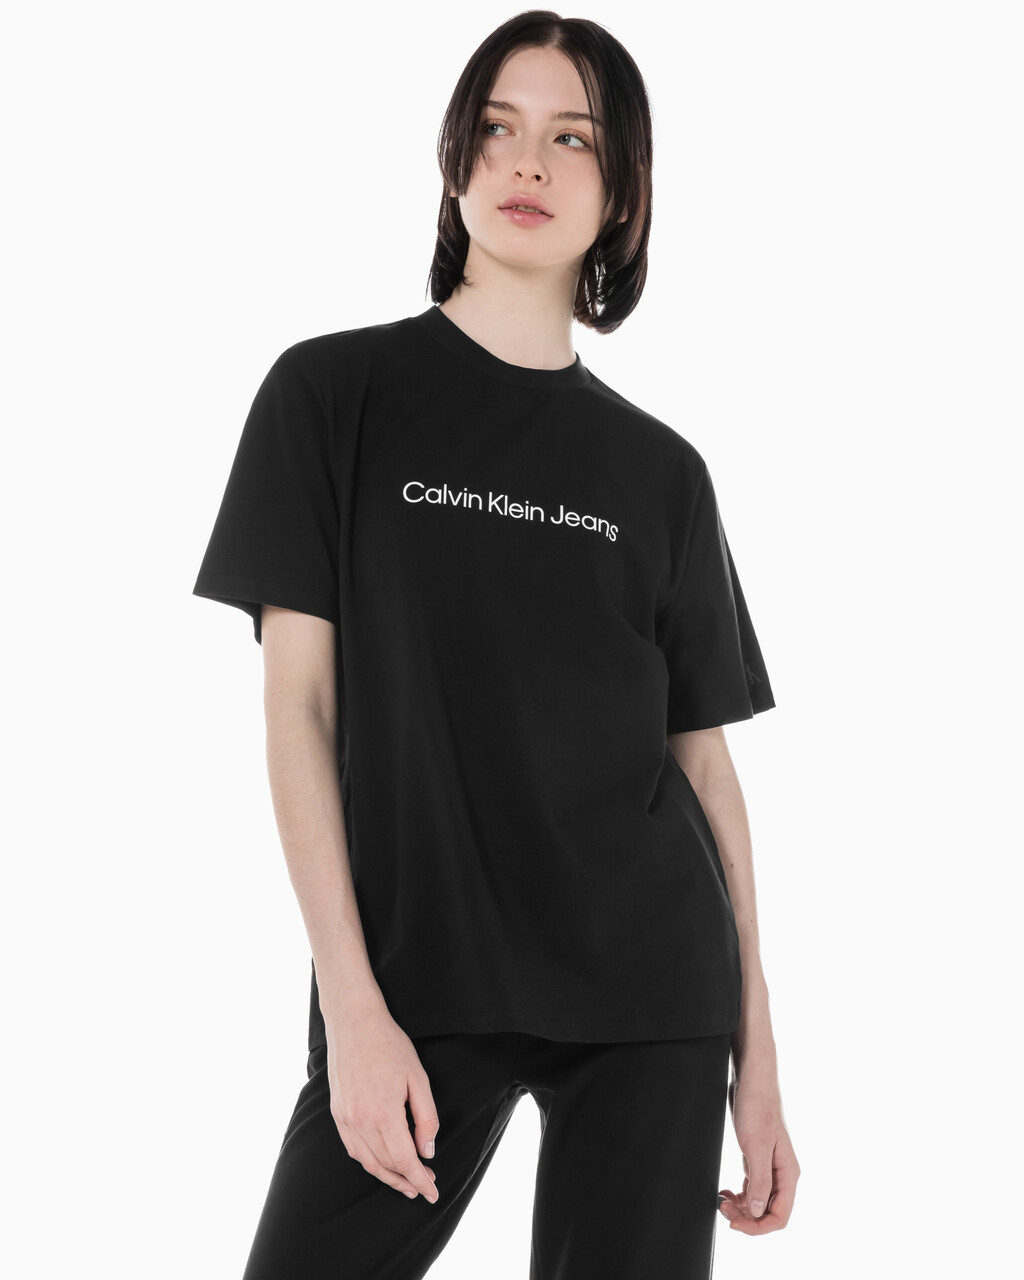 Buy 여성 보이프렌드핏 코튼 스트레치 반팔 티셔츠 in color CK BLACK